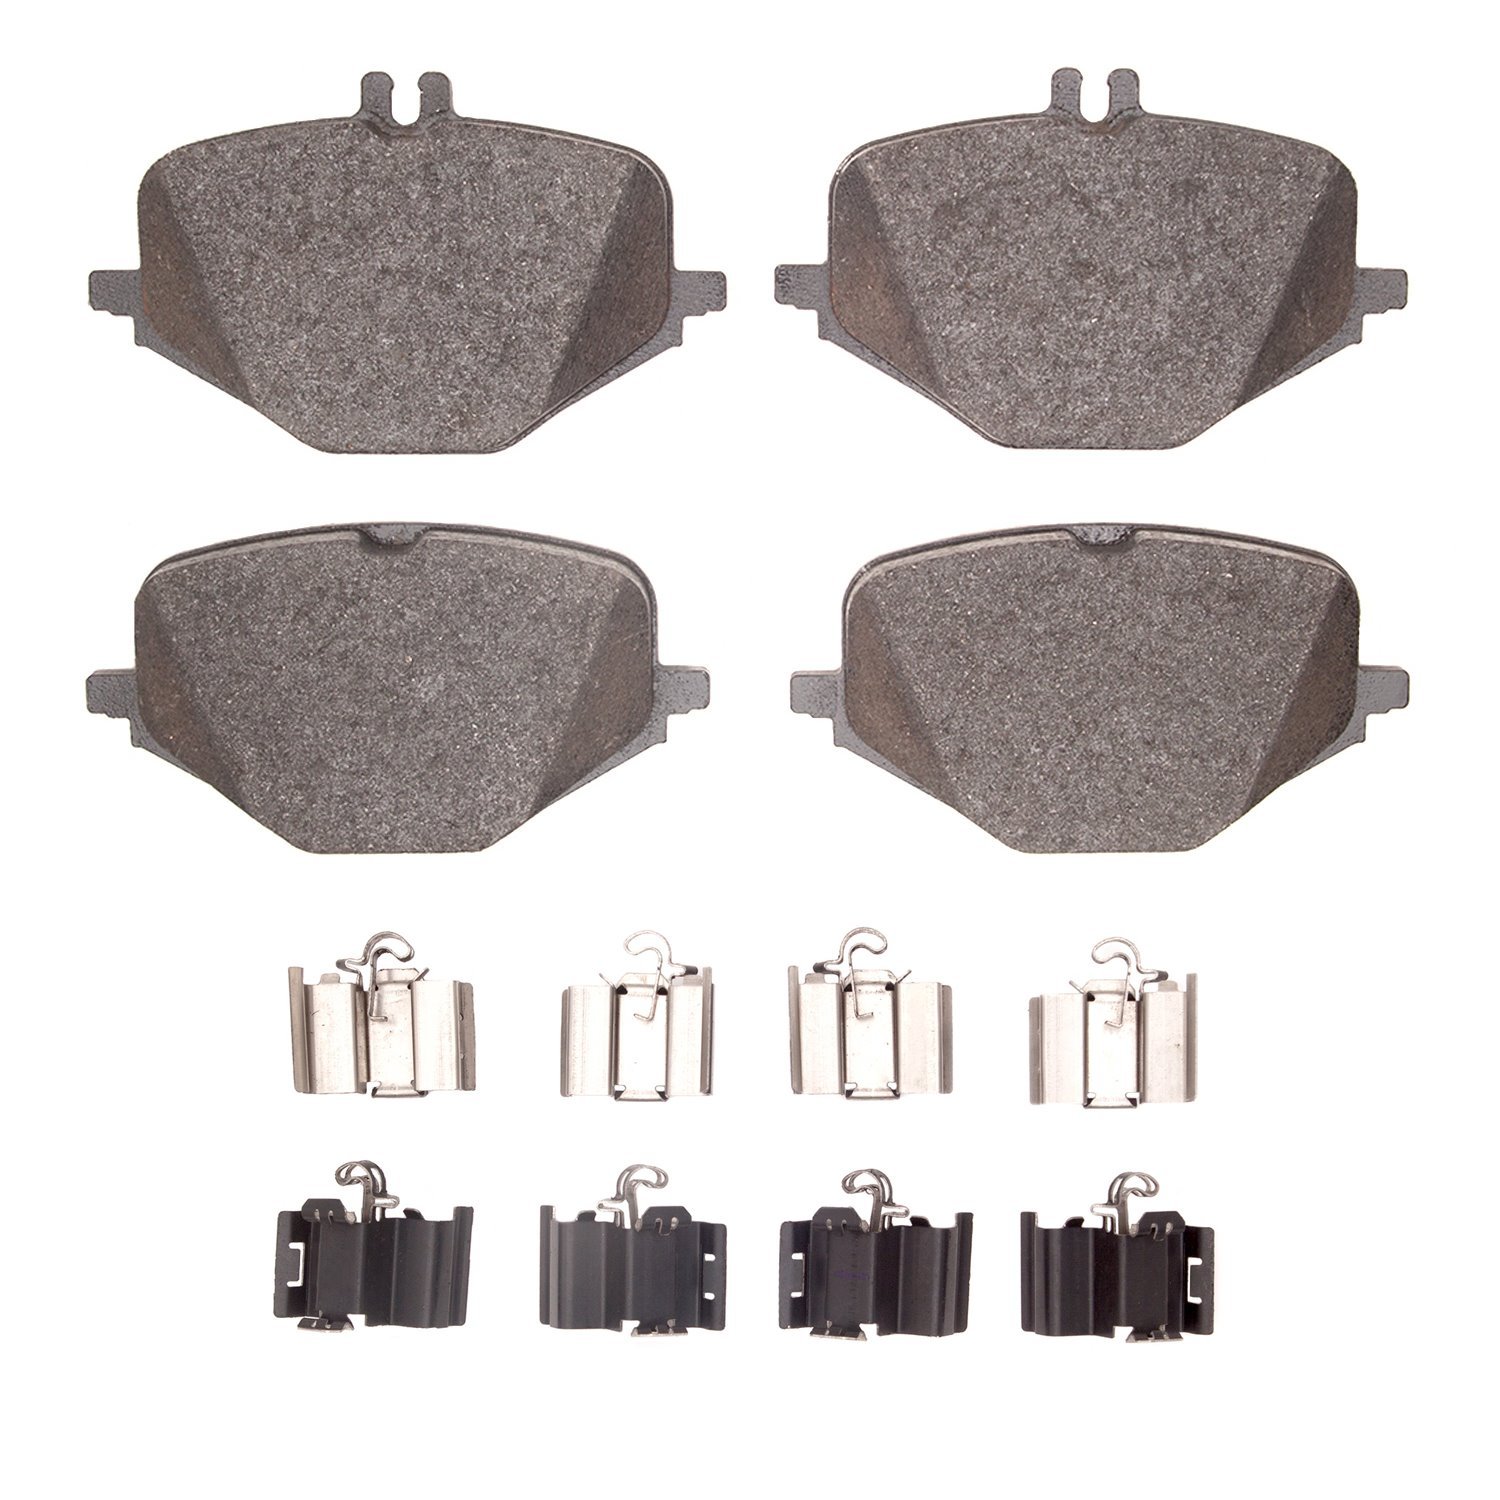 1551-2239-01 5000 Advanced Low-Metallic Brake Pads & Hardware Kit, Fits Select Mercedes-Benz, Position: Rear